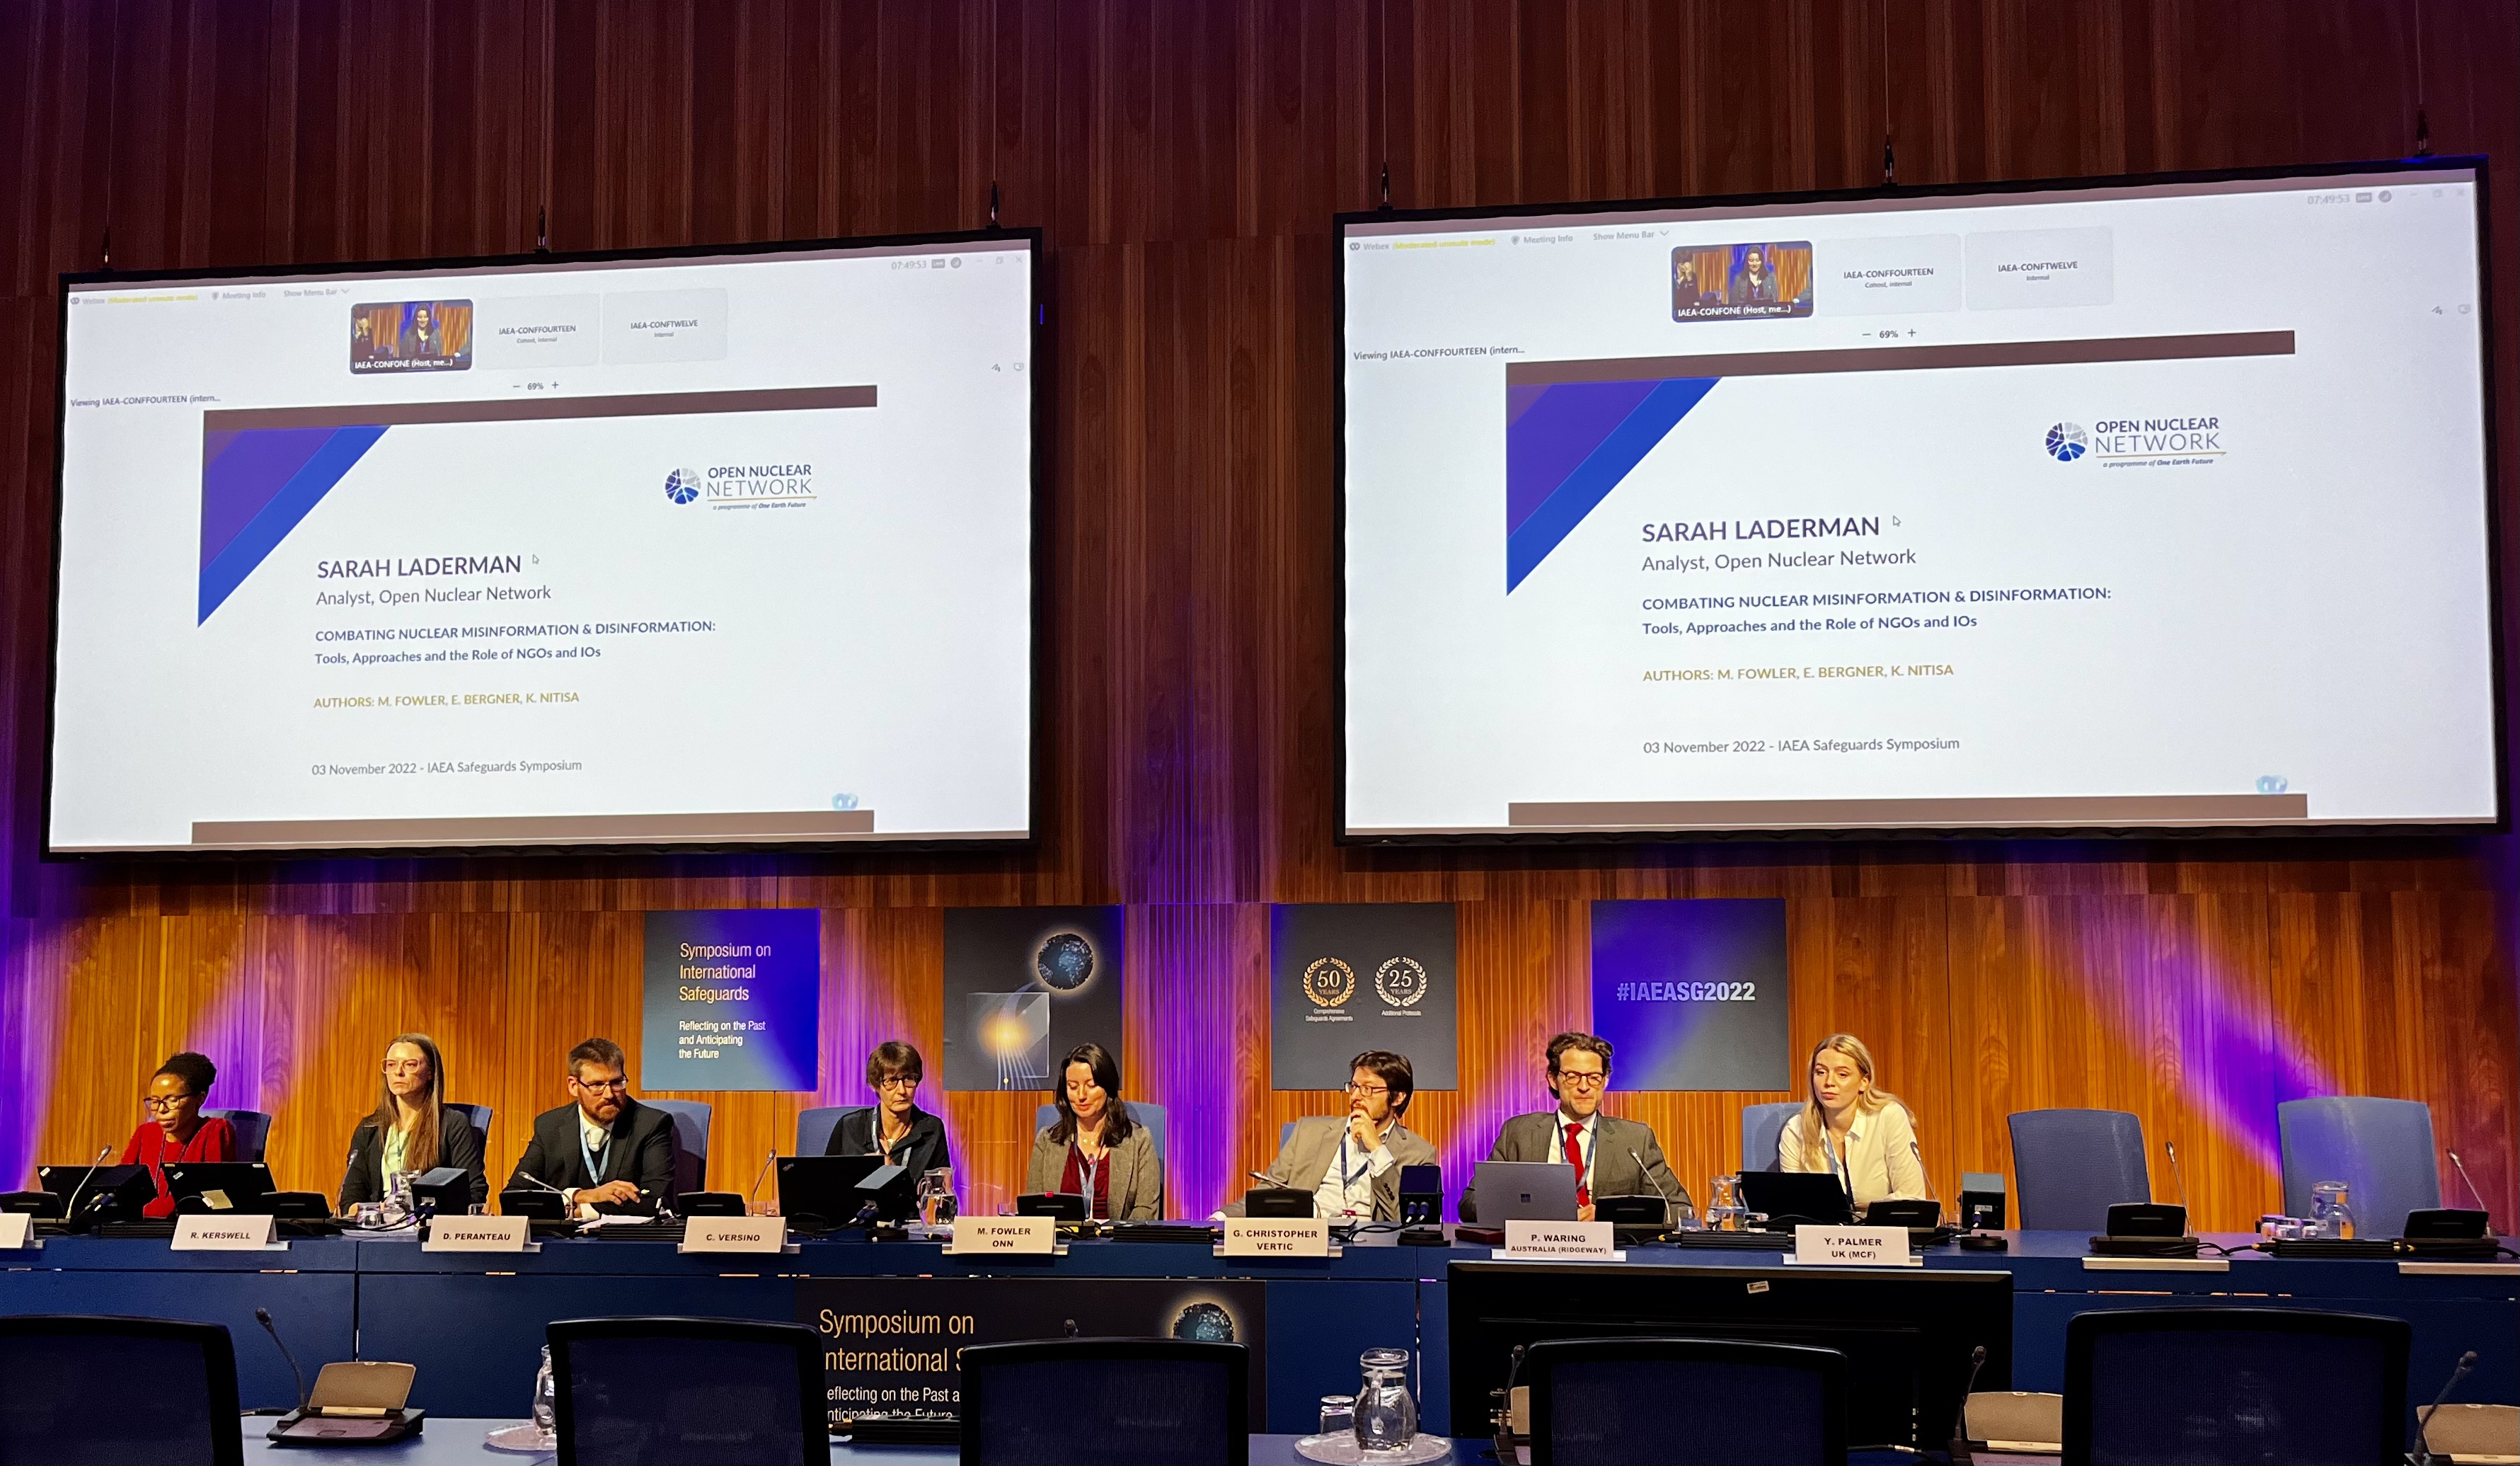 Sarah Laderman presents a paper at the IAEA Symposium on International Safeguards